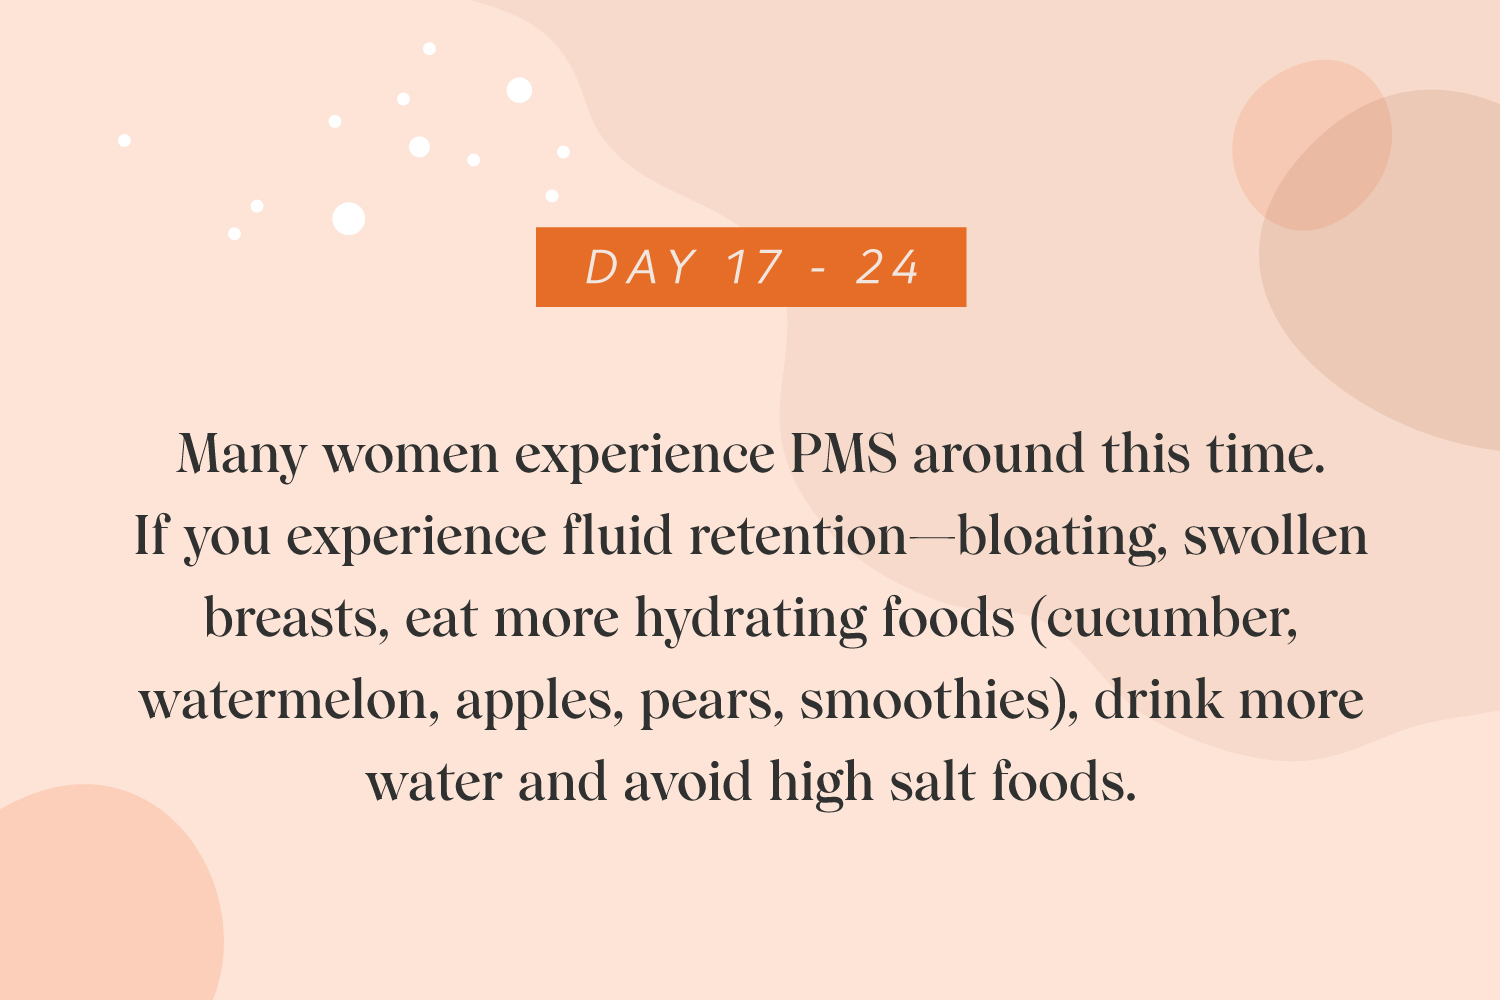 Day 17-24 menstruating woman